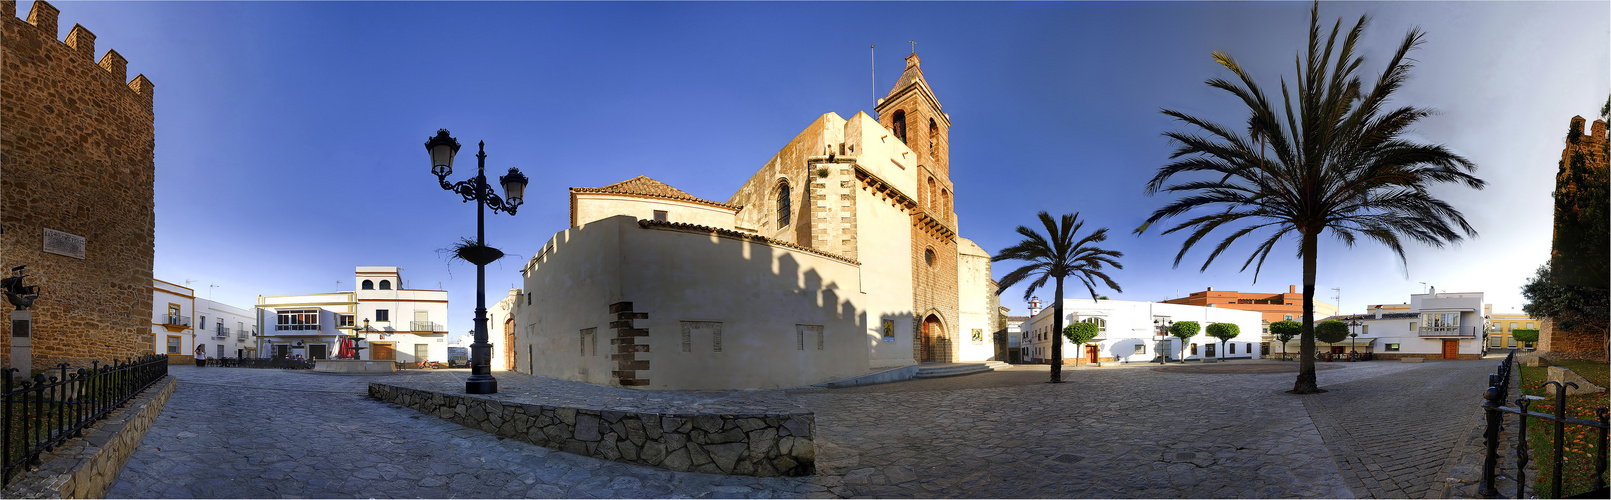 Kirchplatz Rota, Andalusien / Siesta